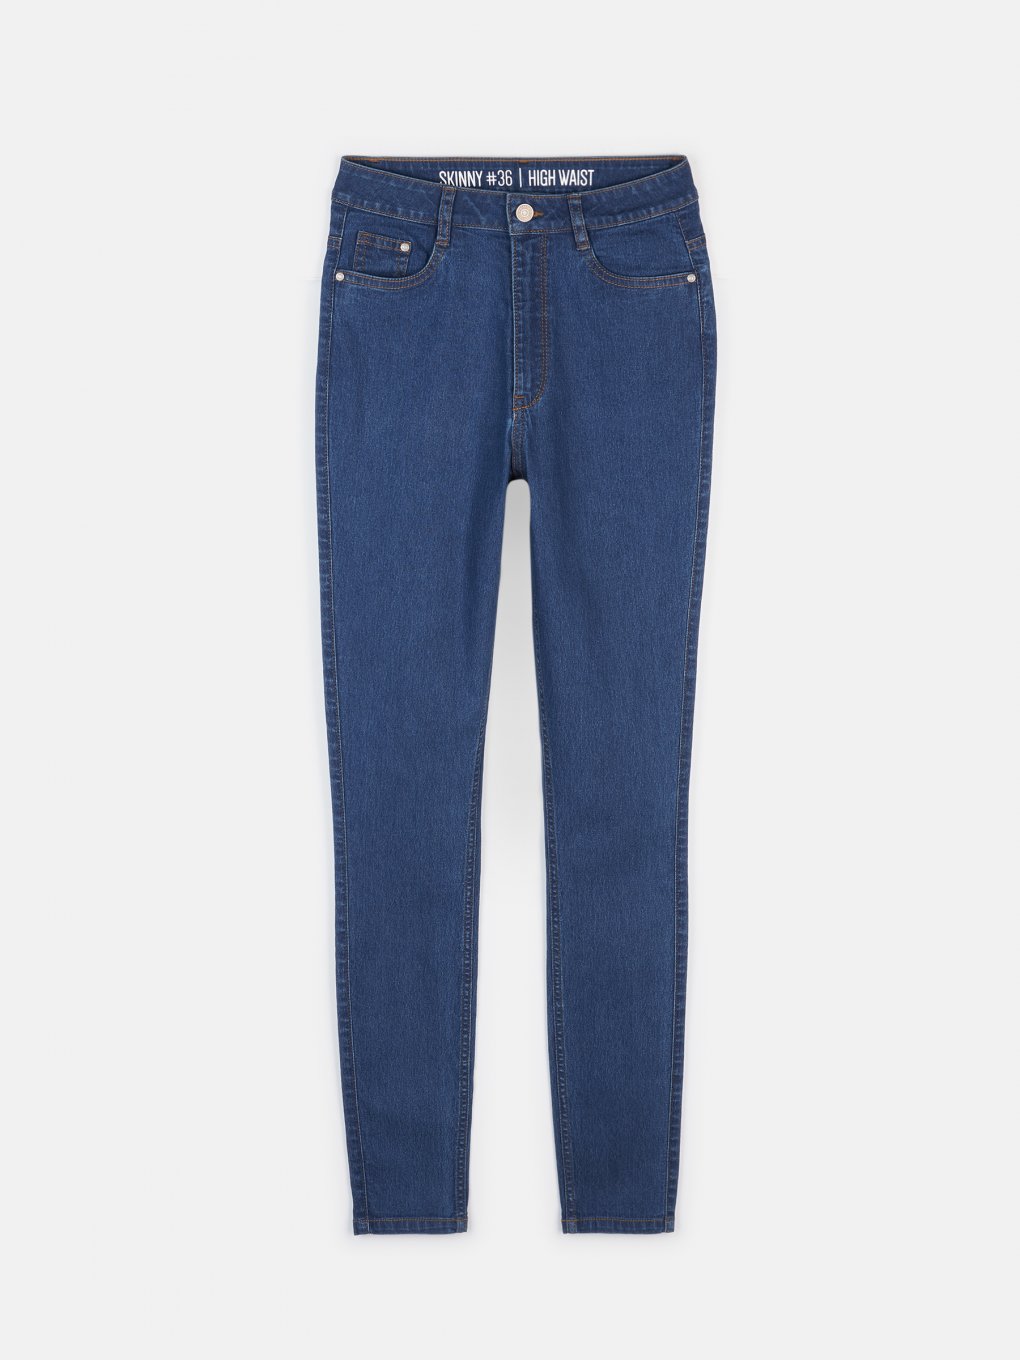 WOMEN FASHION Jeans Embroidery White 34                  EU Mango shorts jeans discount 96% 